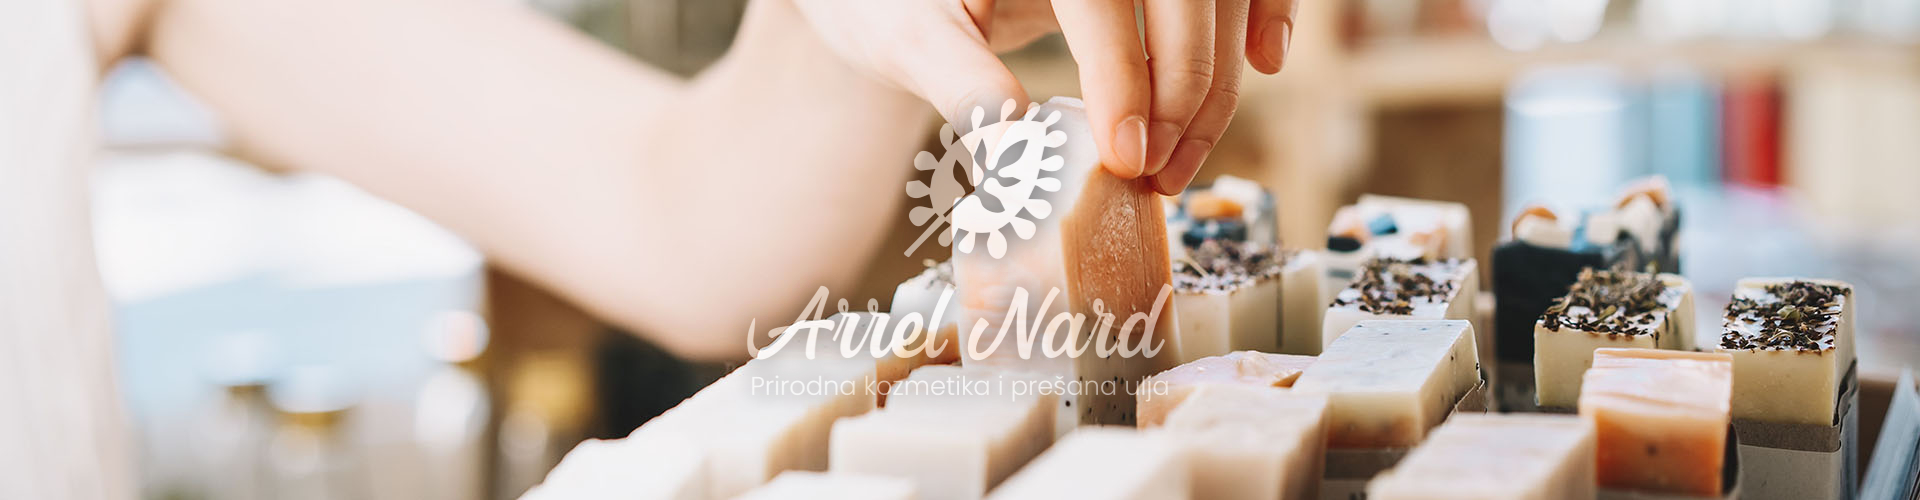 Arrel Nard - Prirodna kozmetika i prešanja ulja